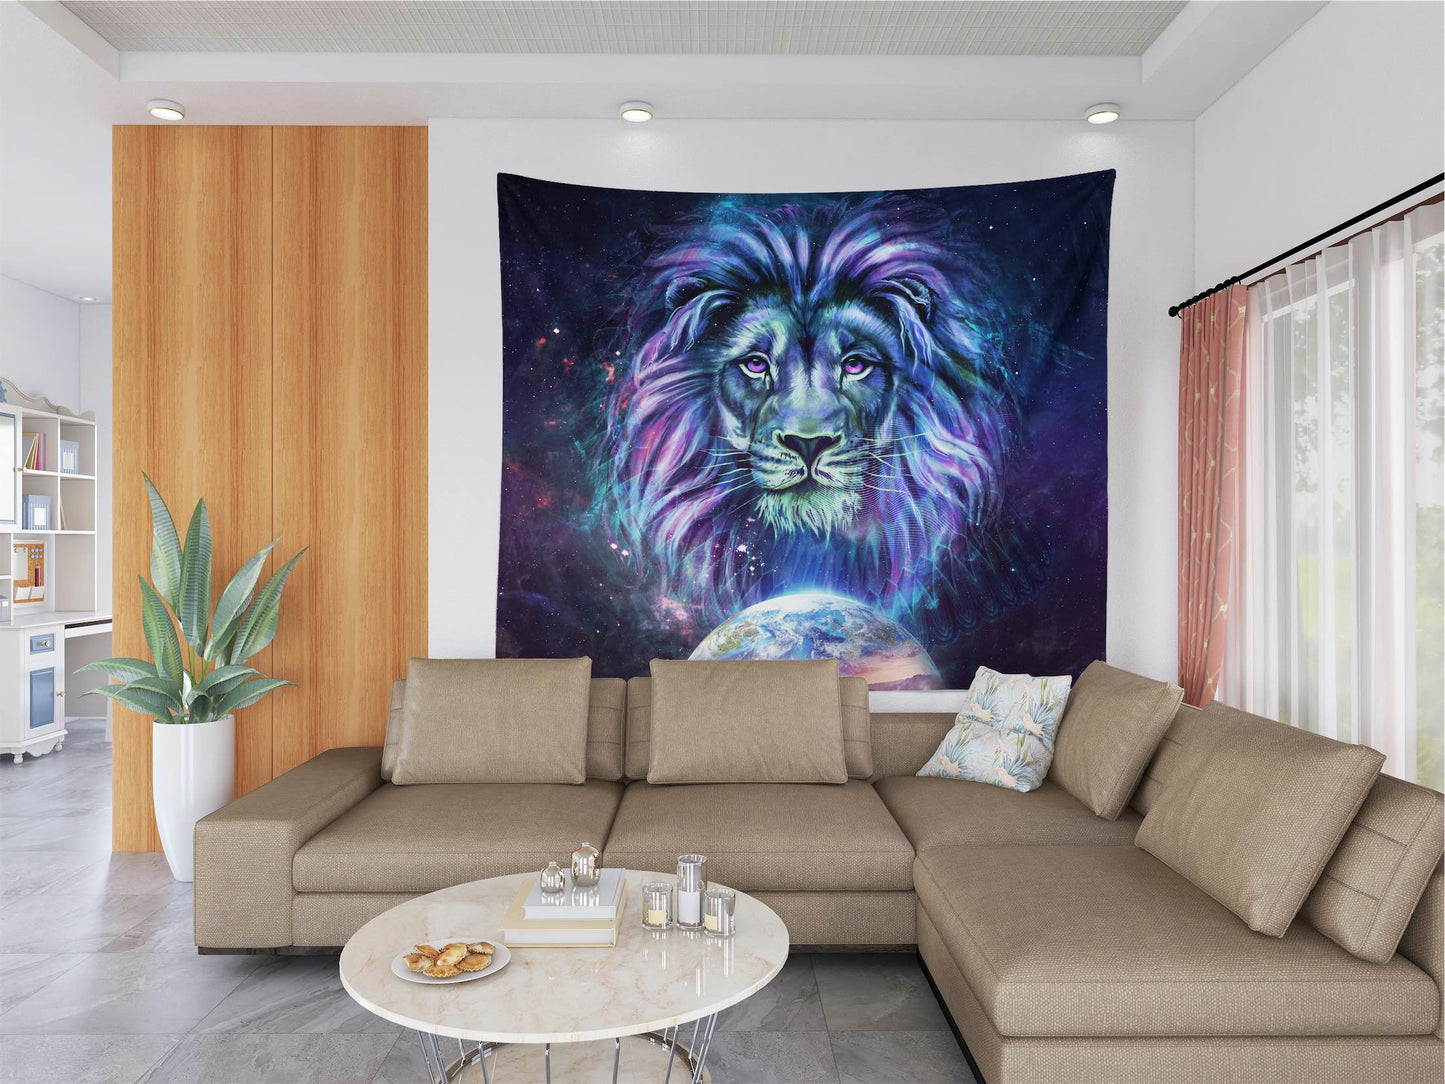 Cosmic spirit animal lion wall tapestry in living room